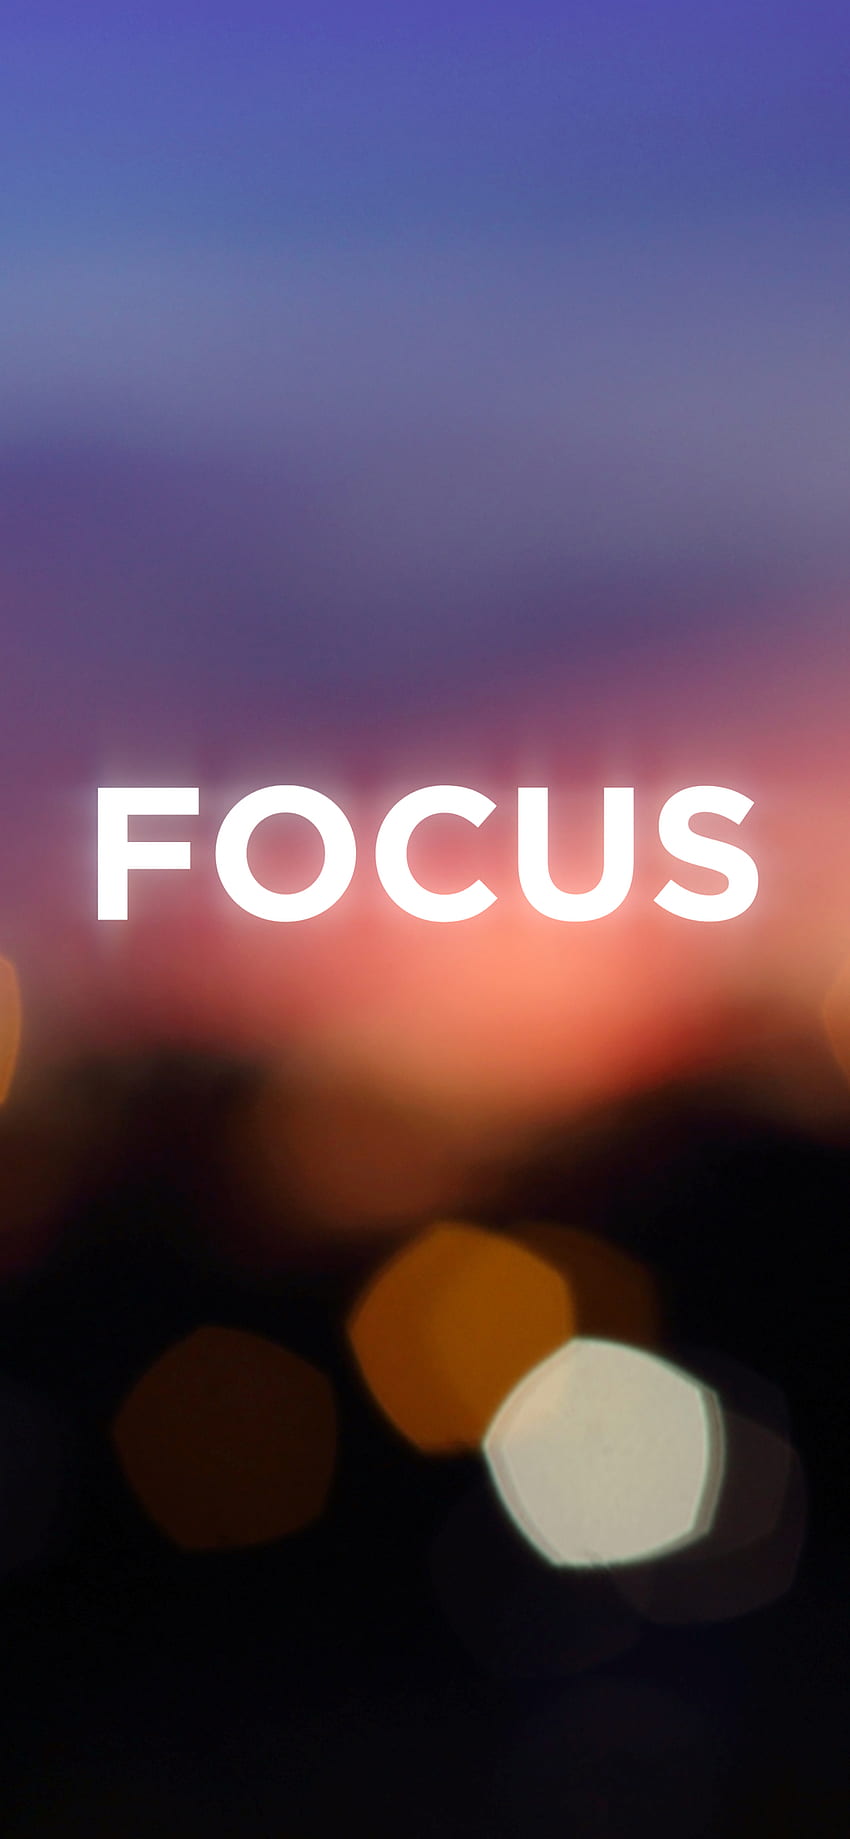 Focus - Motivational Quote Wallpaper Download | MobCup